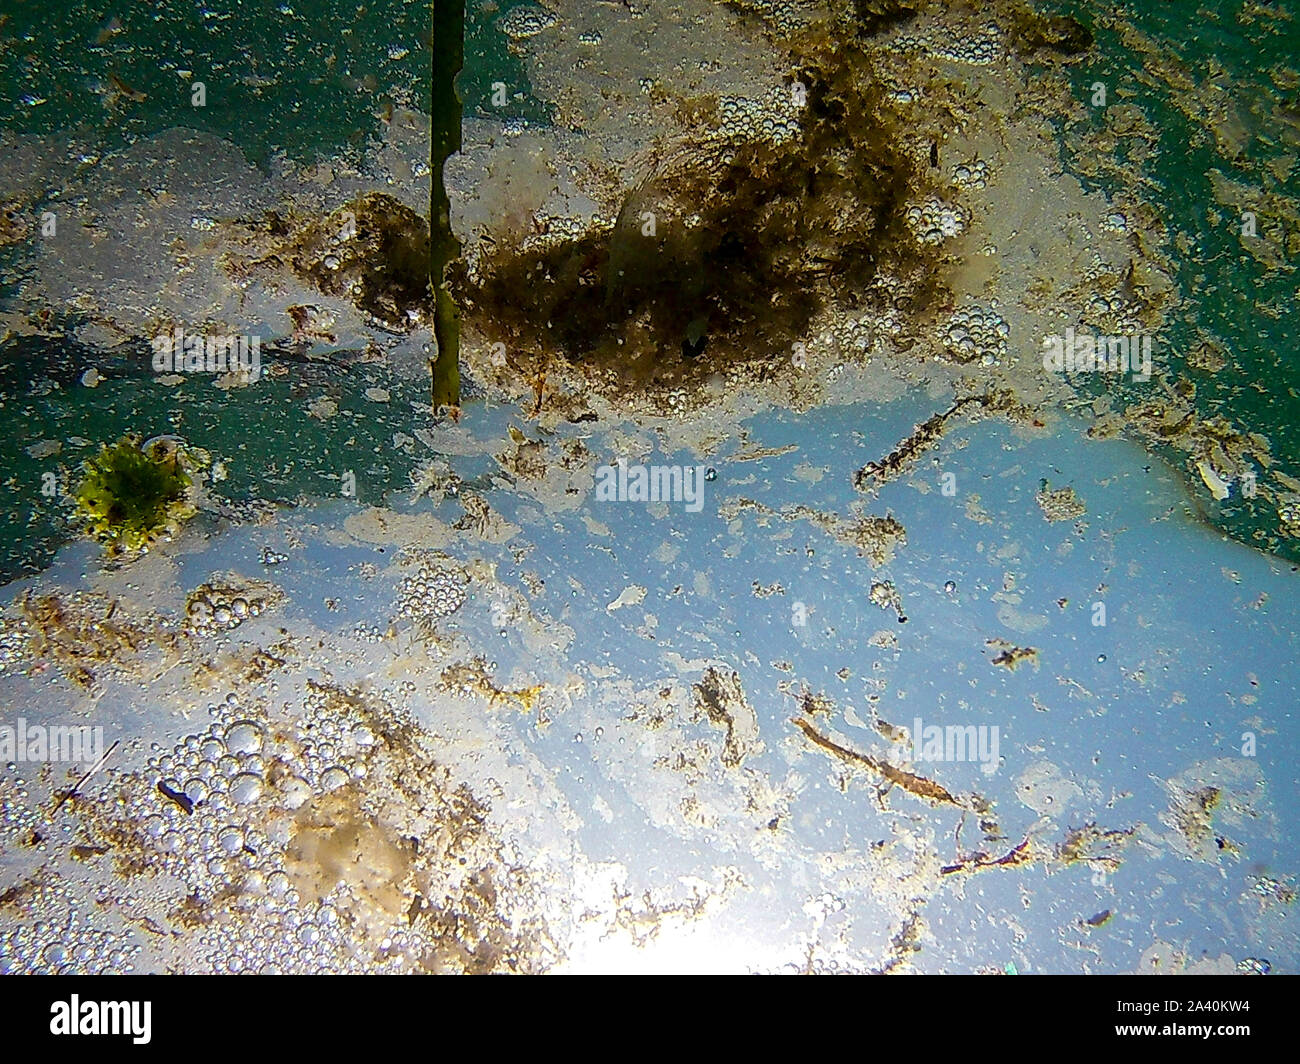 Bonassola (SP)-Mare sporco e invaso da meduse Stockfoto